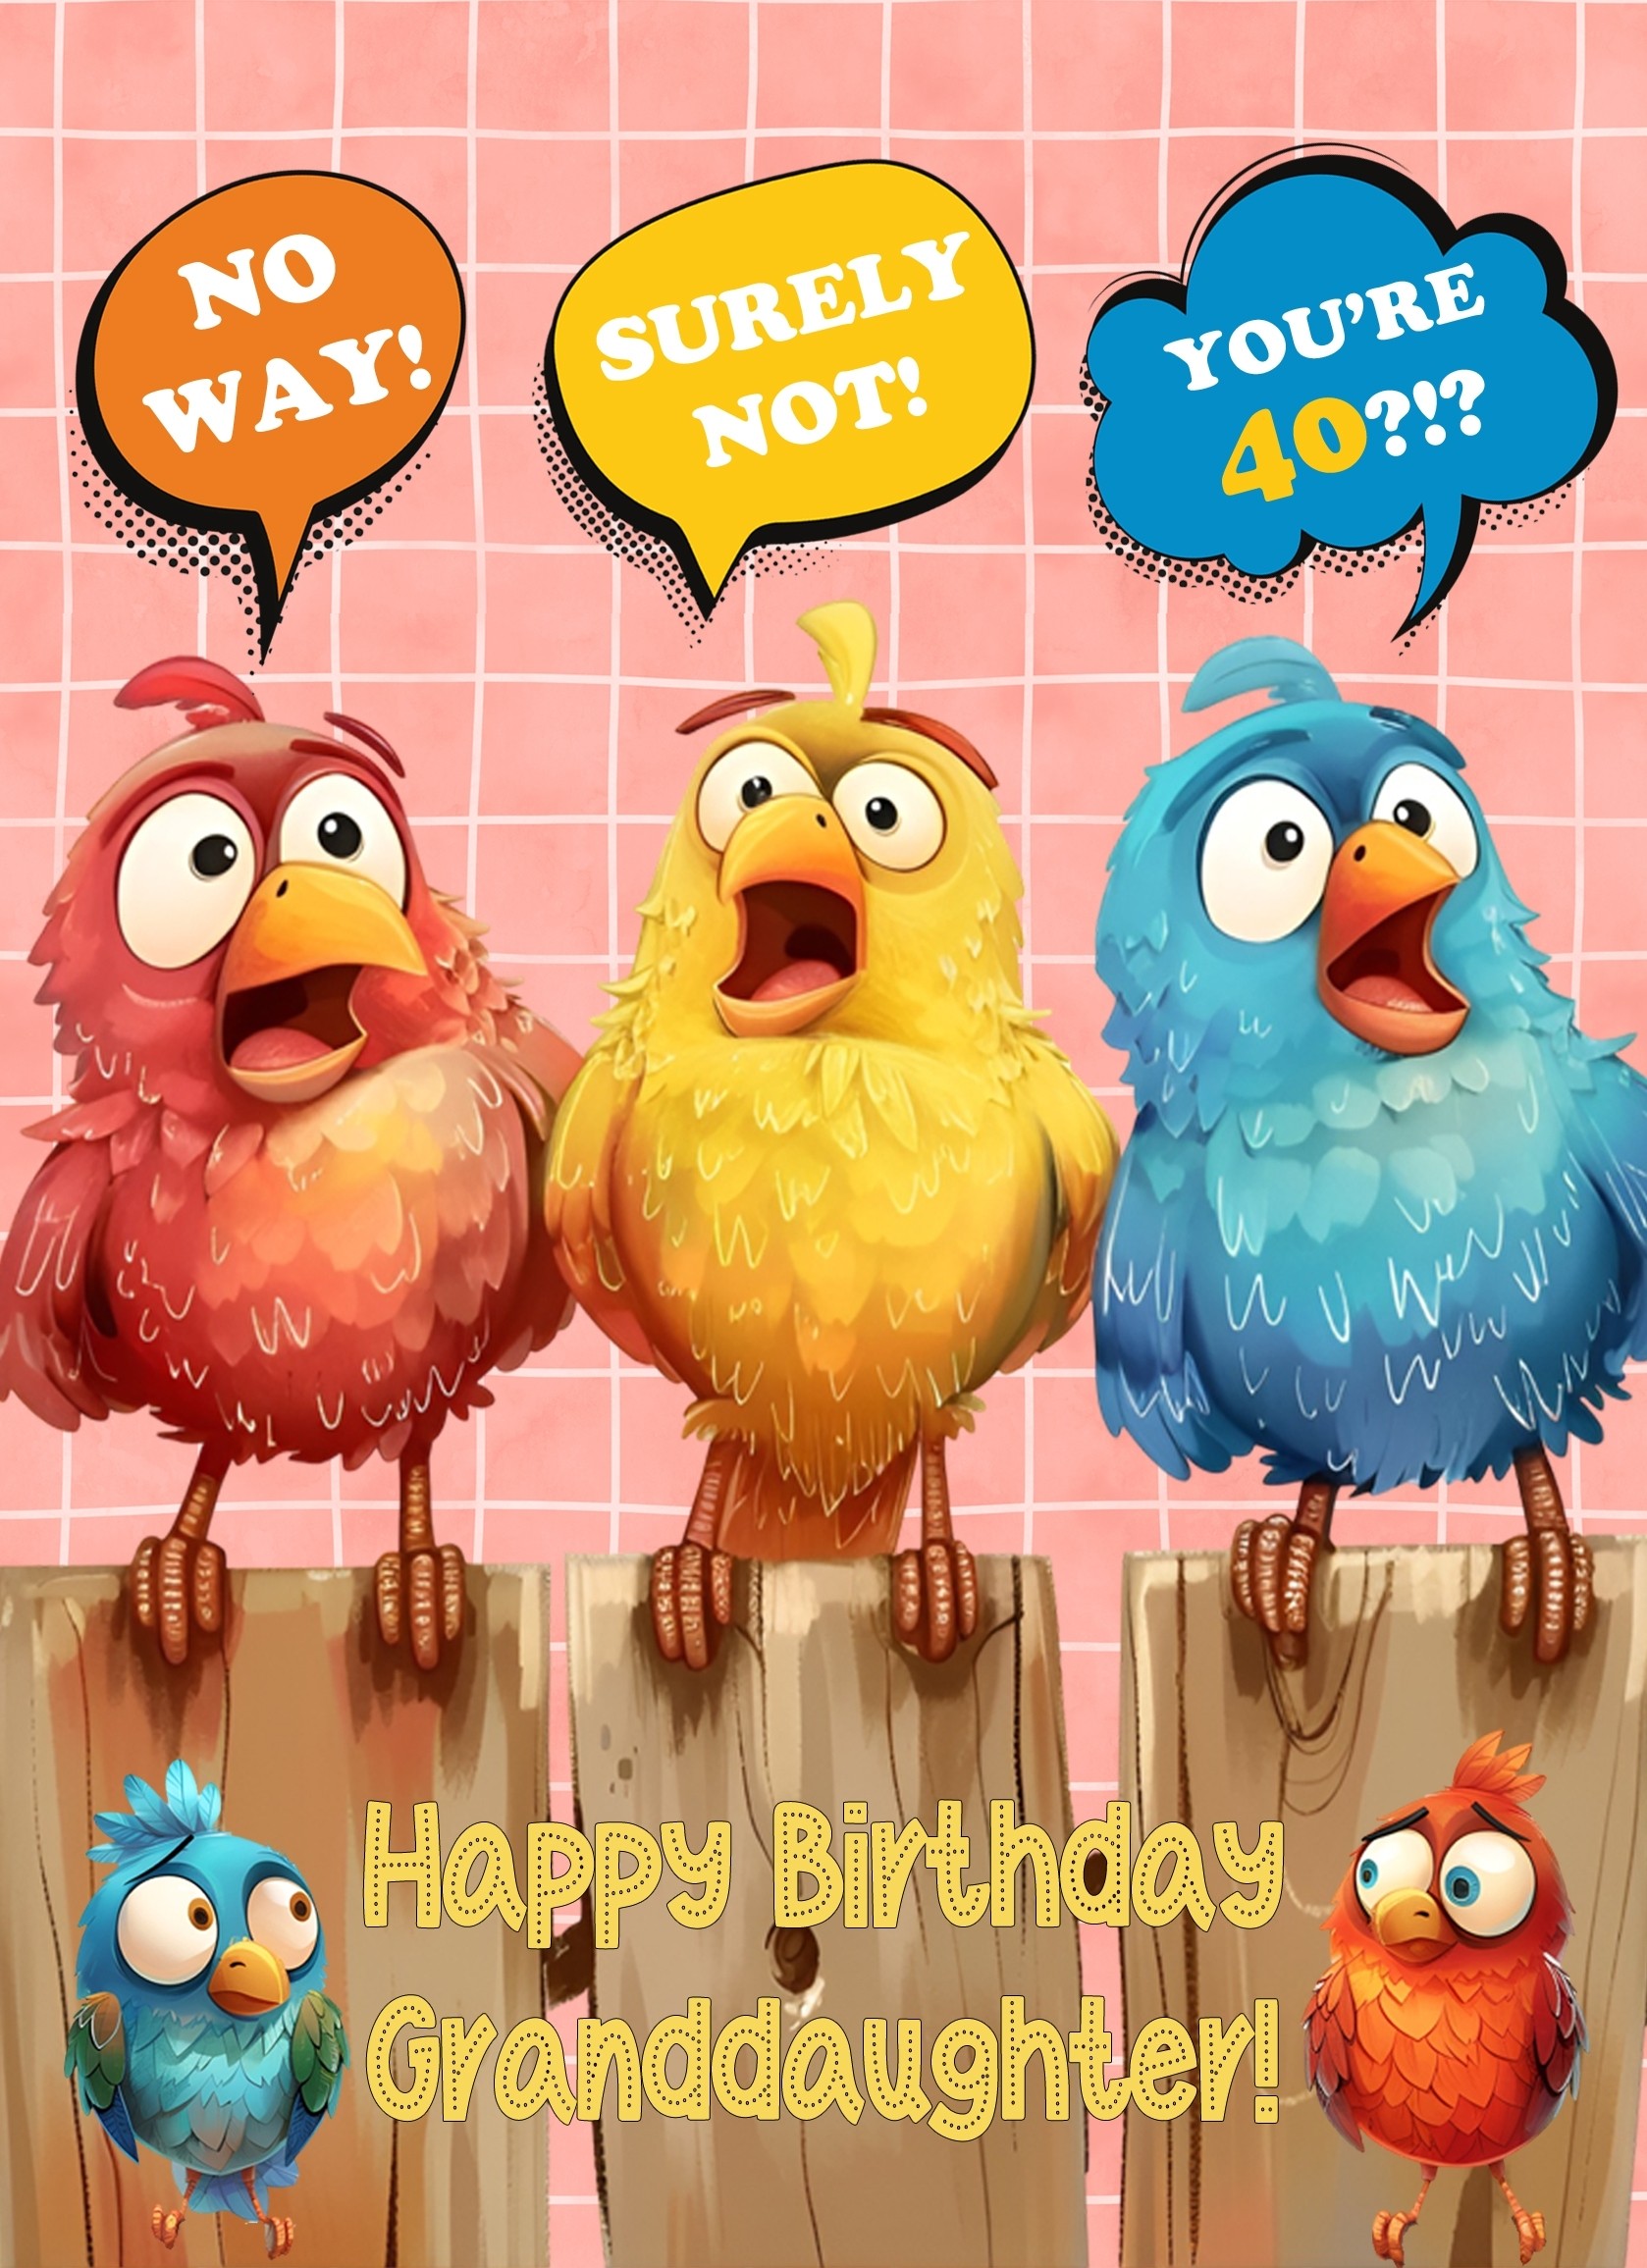 Granddaughter 40th Birthday Card (Funny Birds Surprised)